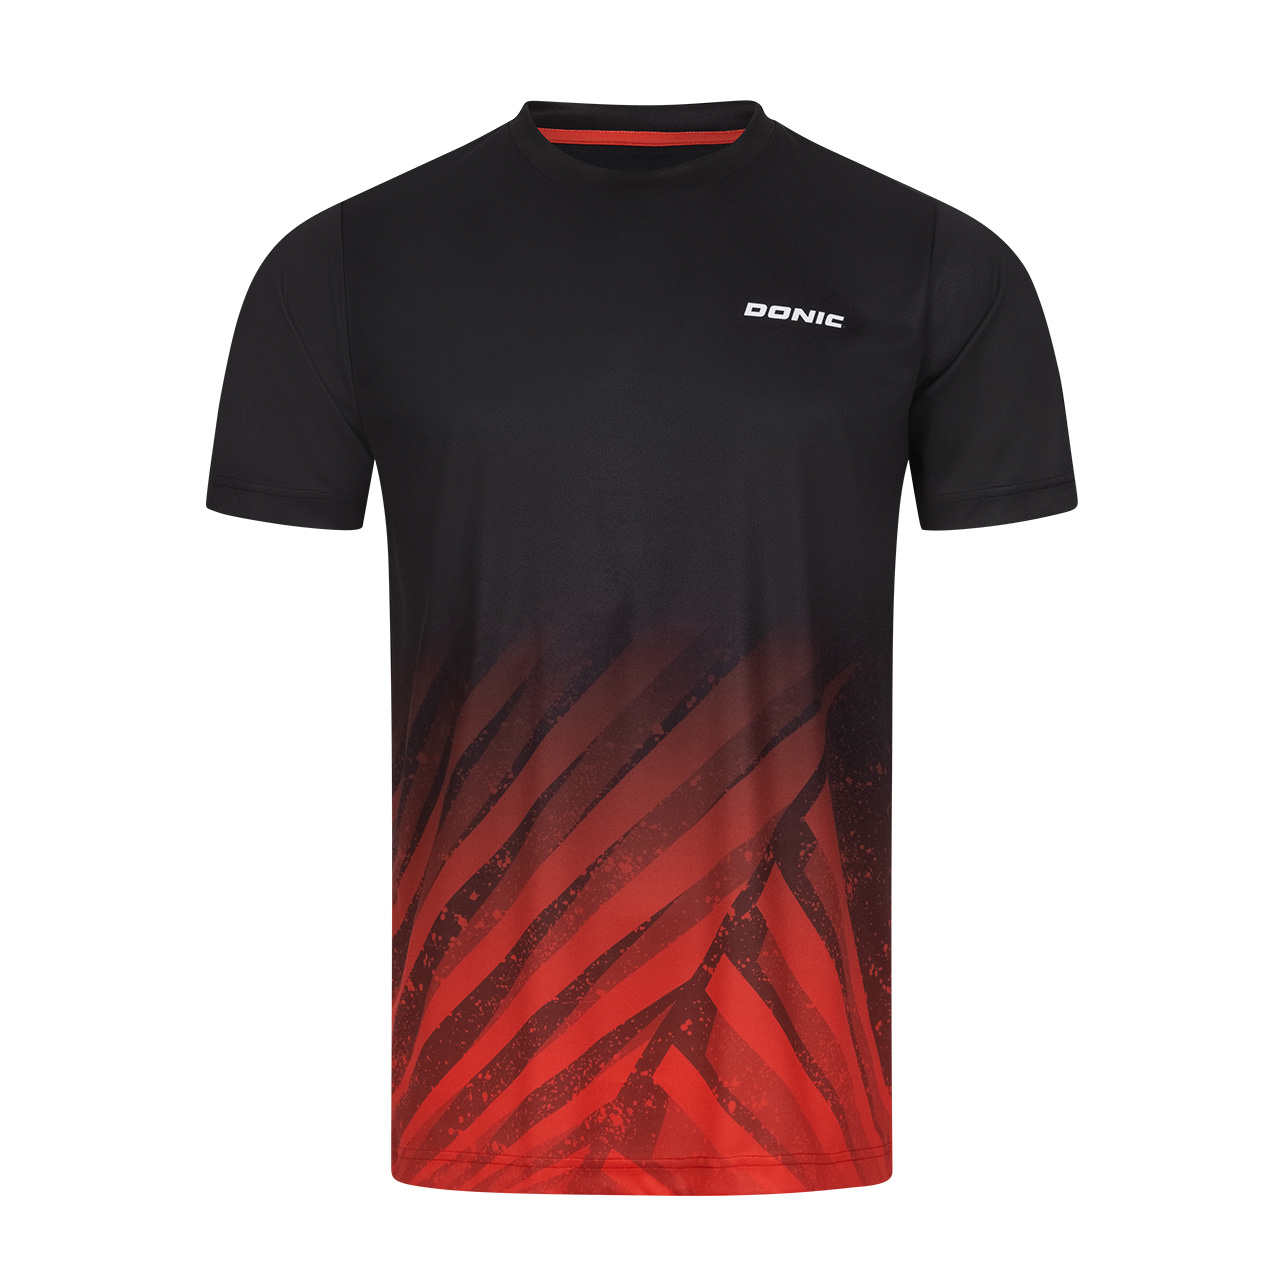 DONIC T-Shirt Argon schwarz/rot Brust